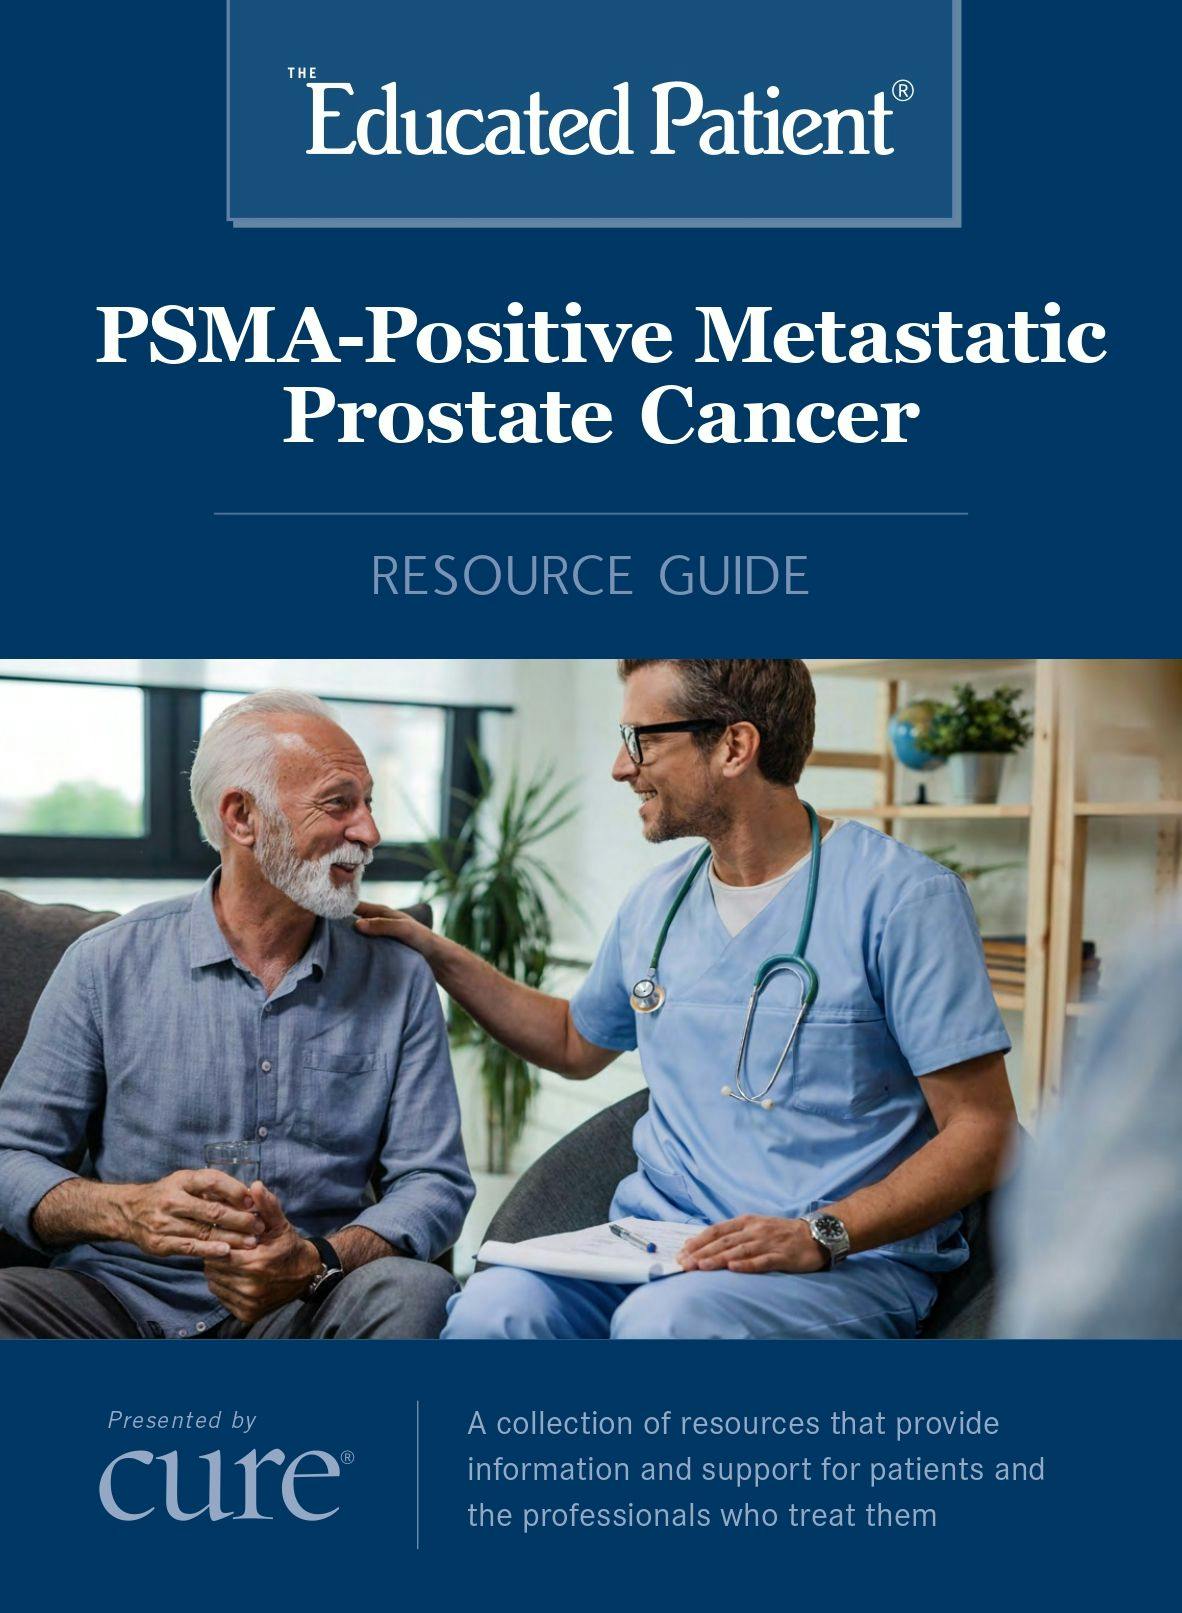 PSMA-Positive Metastatic Prostate Cancer